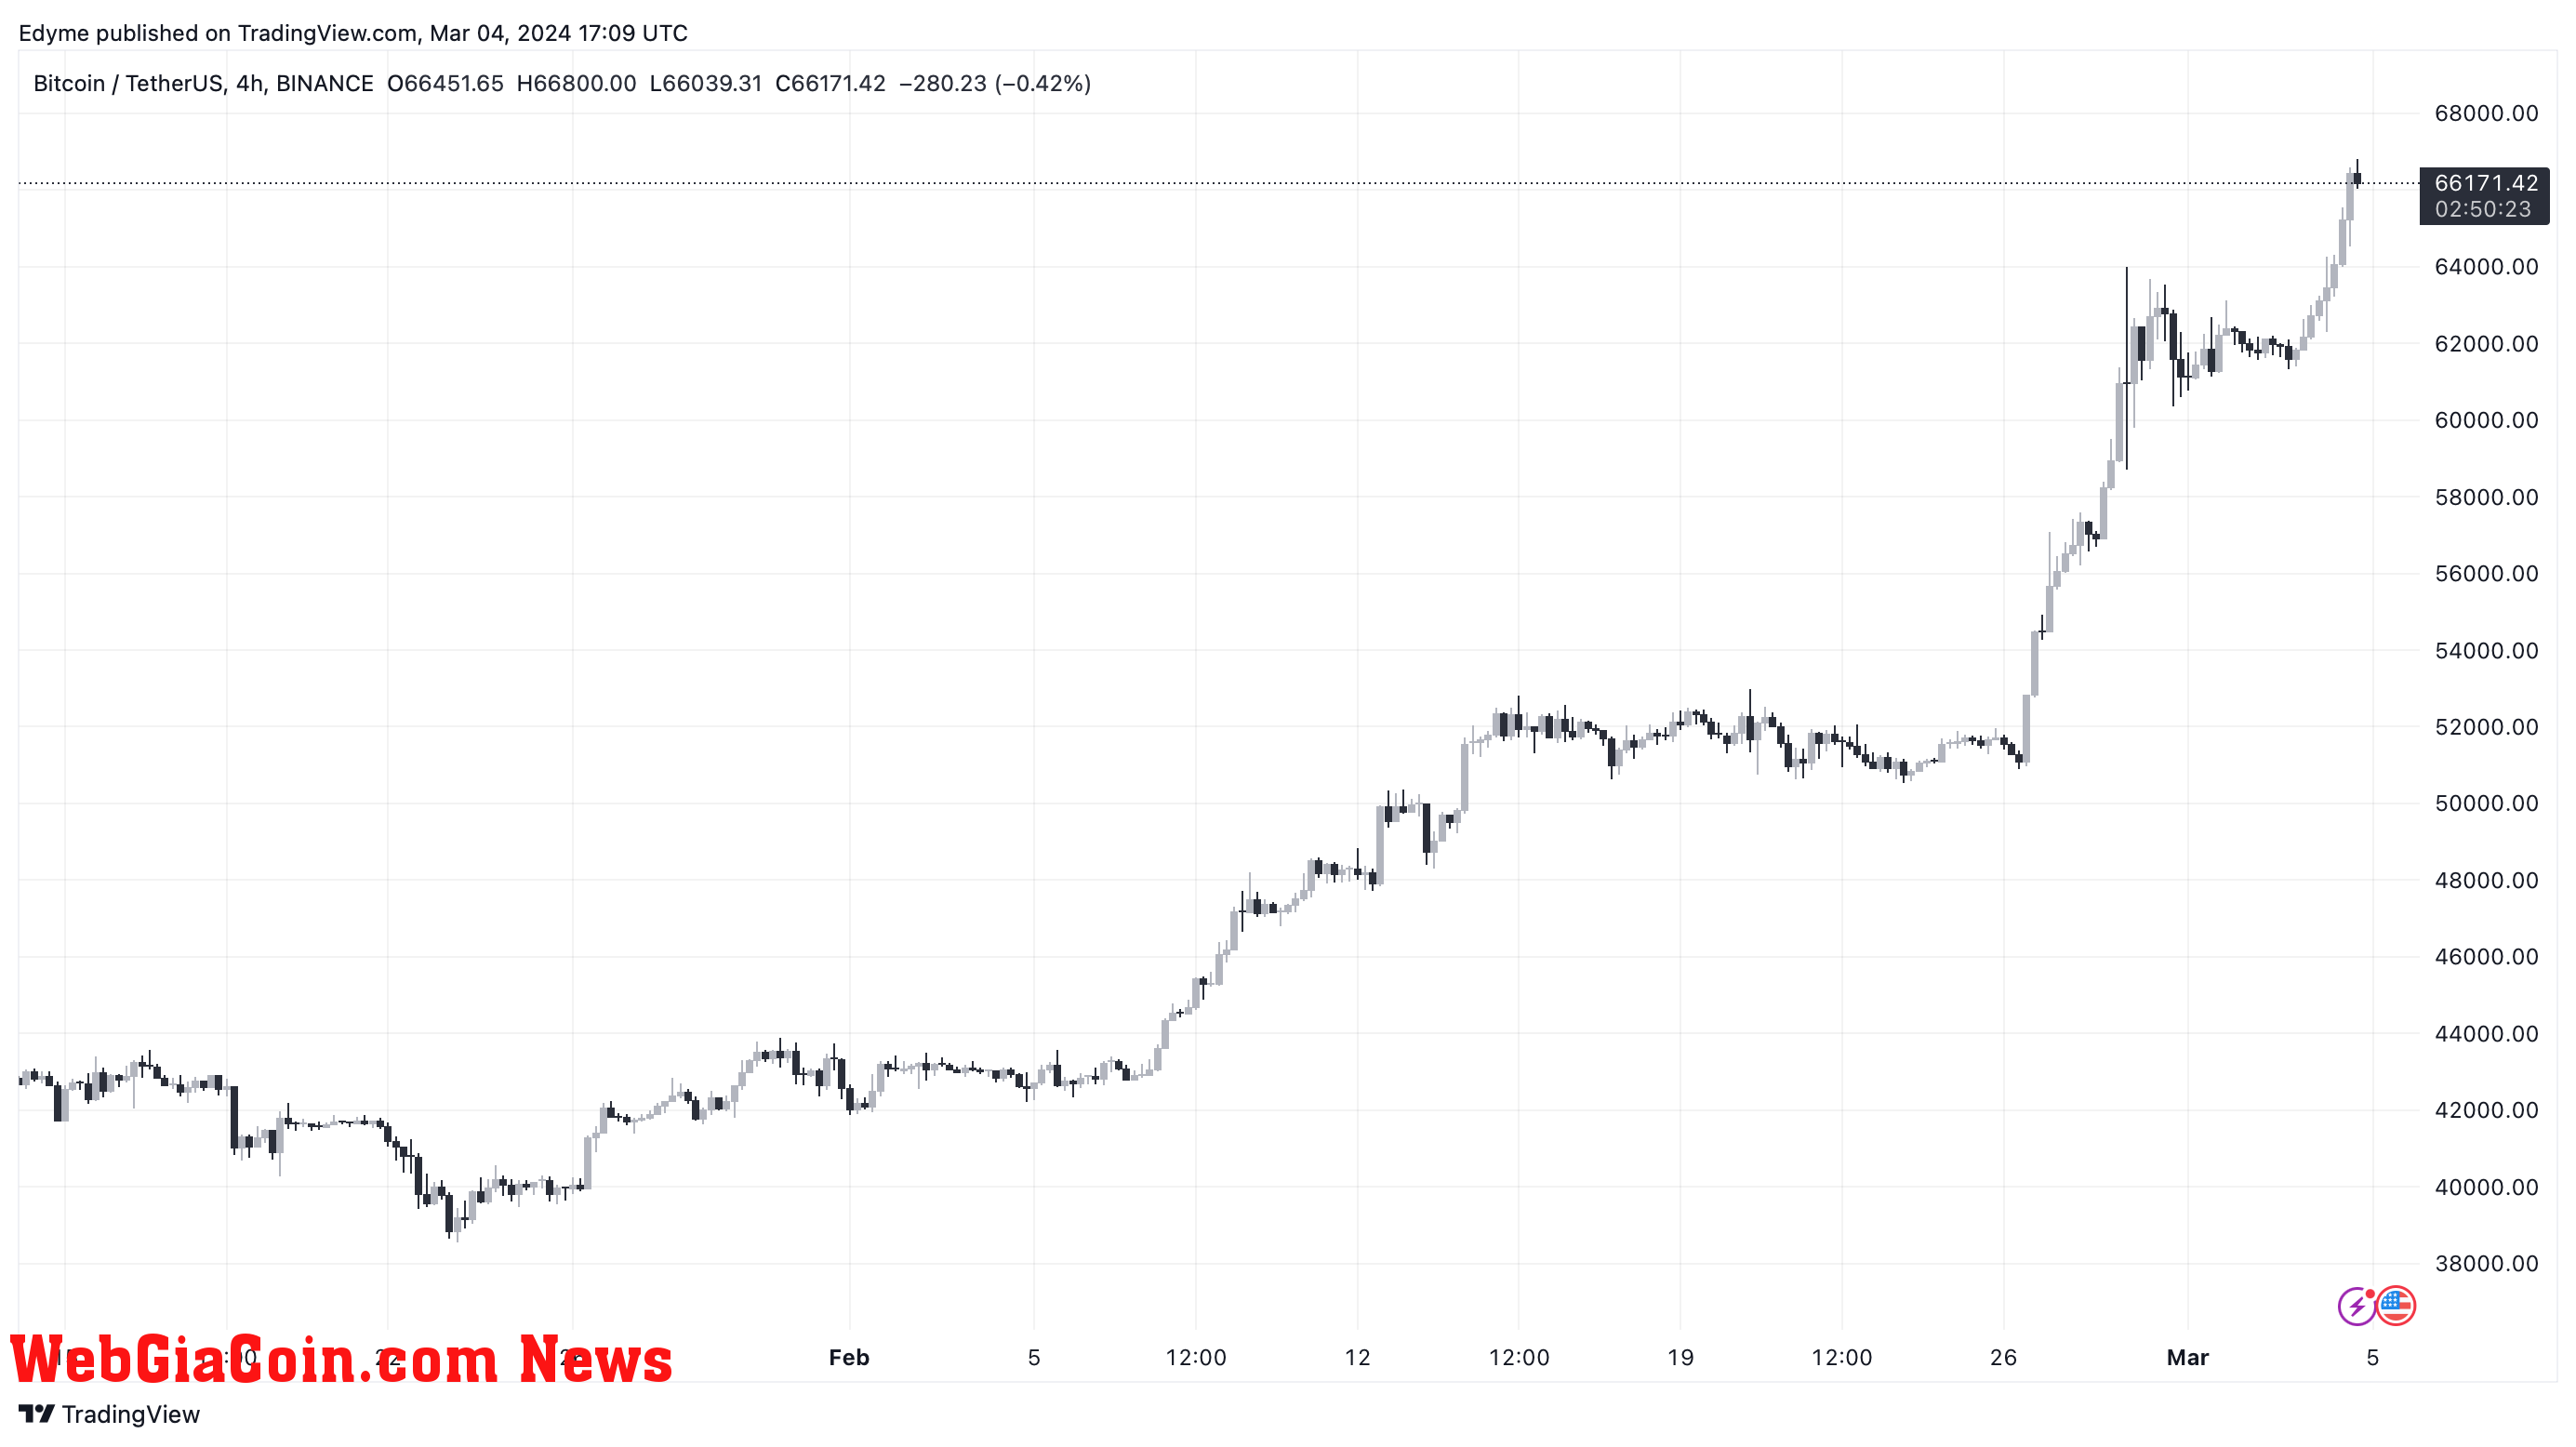 Bitcoin (BTC) price chart on TradingView